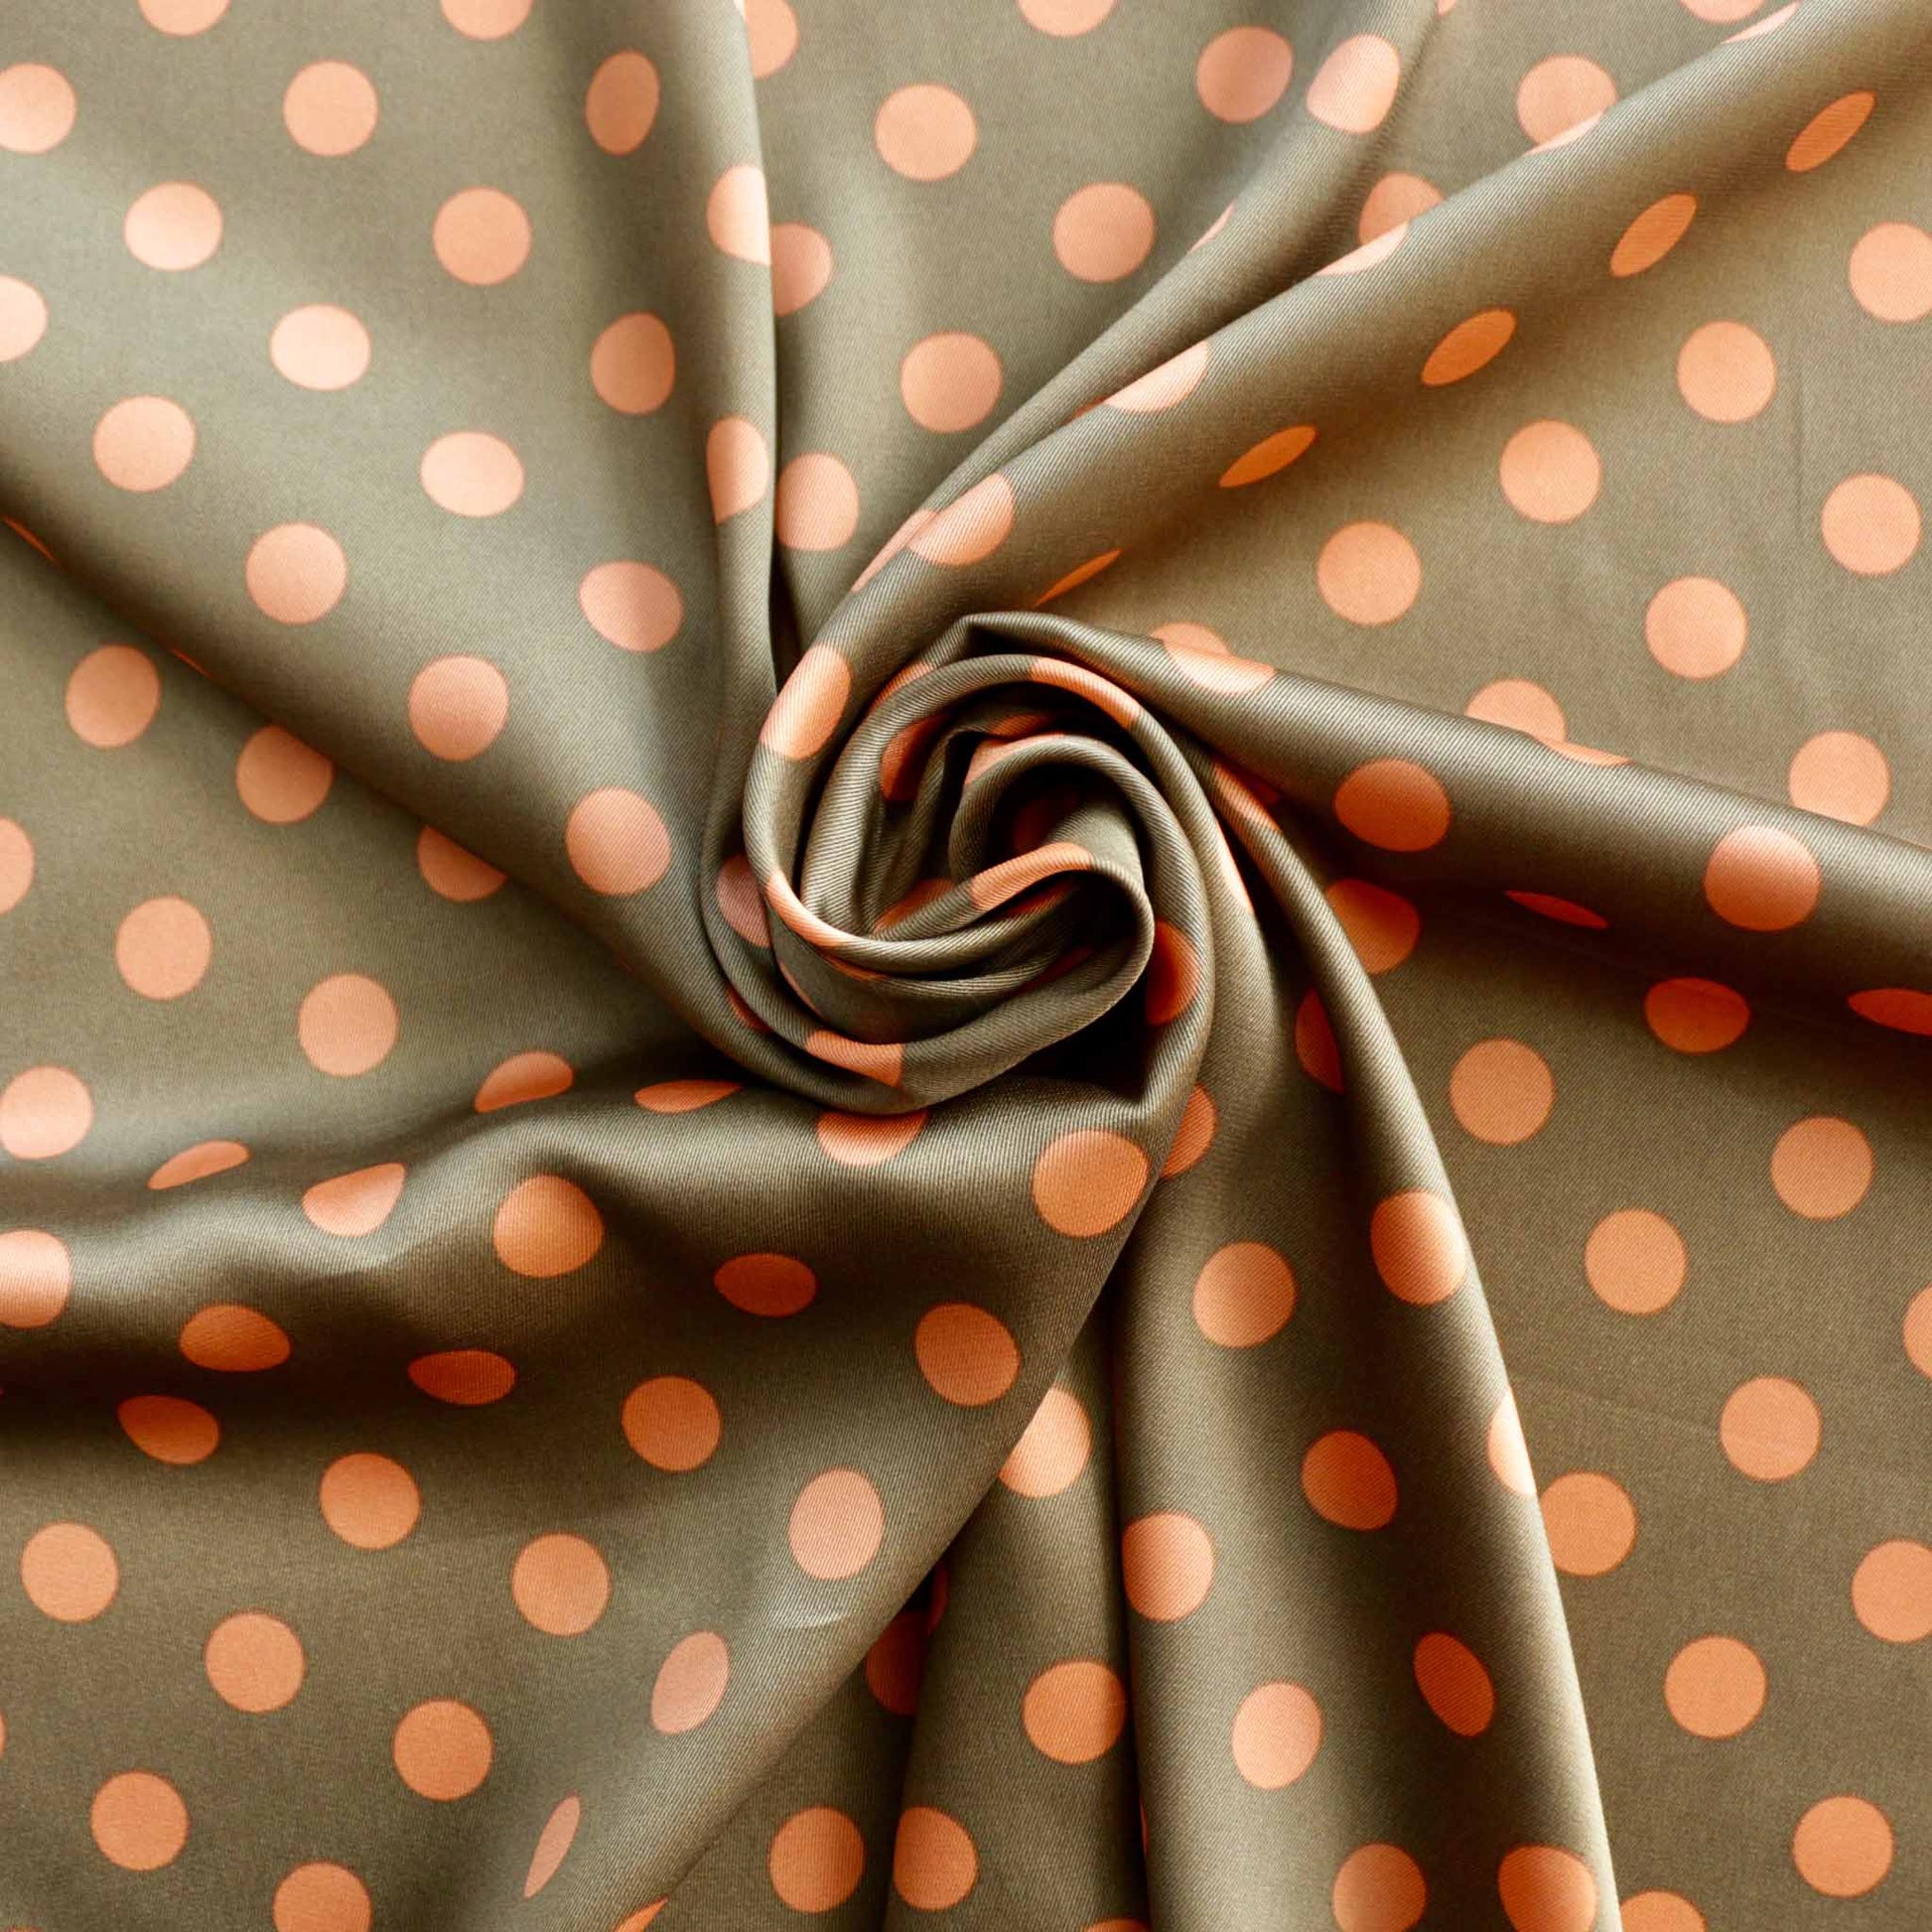 polka dot print sating dressmaking fabric in beige and peach